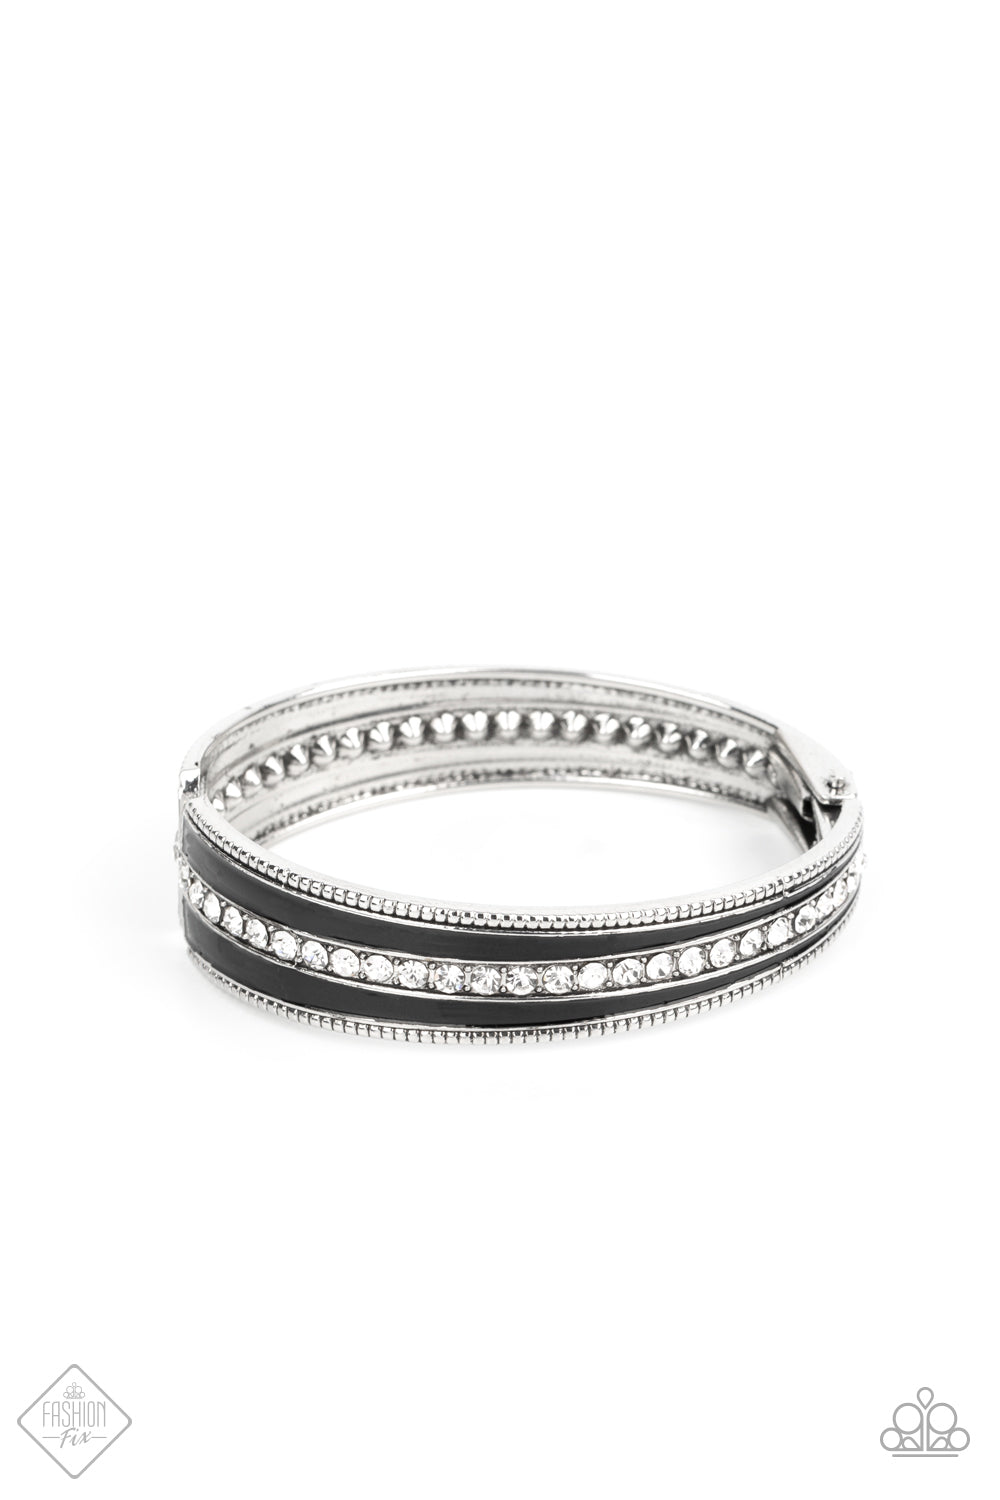 Buy Black Sterling Silver Black Diamond Macramé Smooth Bead Rope Bracelet  13.25ct Online at SO ICY JEWELRY